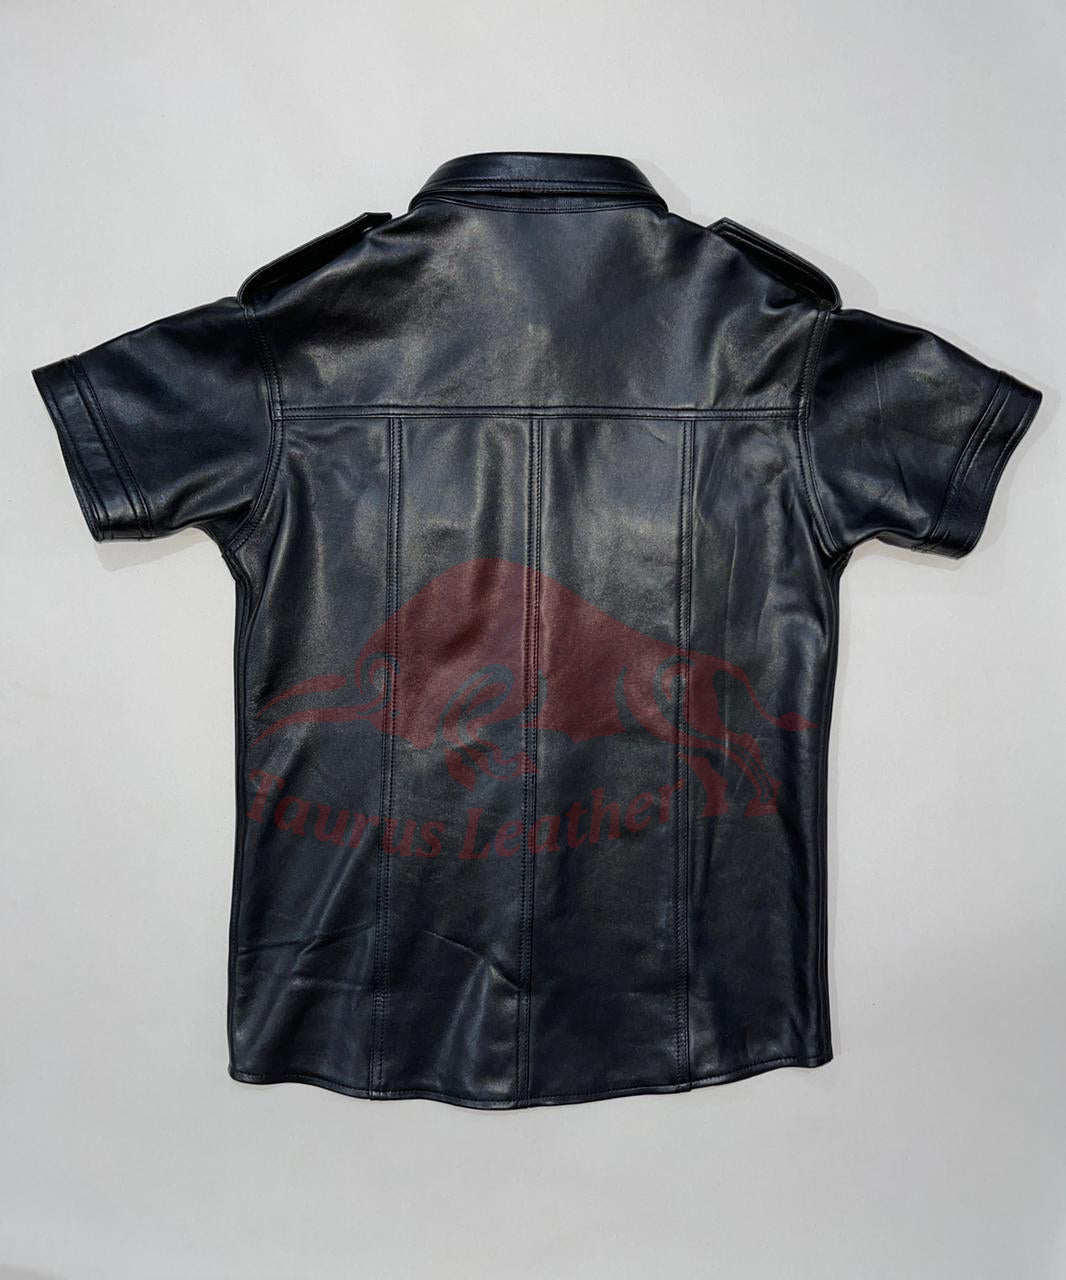 TAURUS LEATHER Black Sheep Leather Police Style Shirt